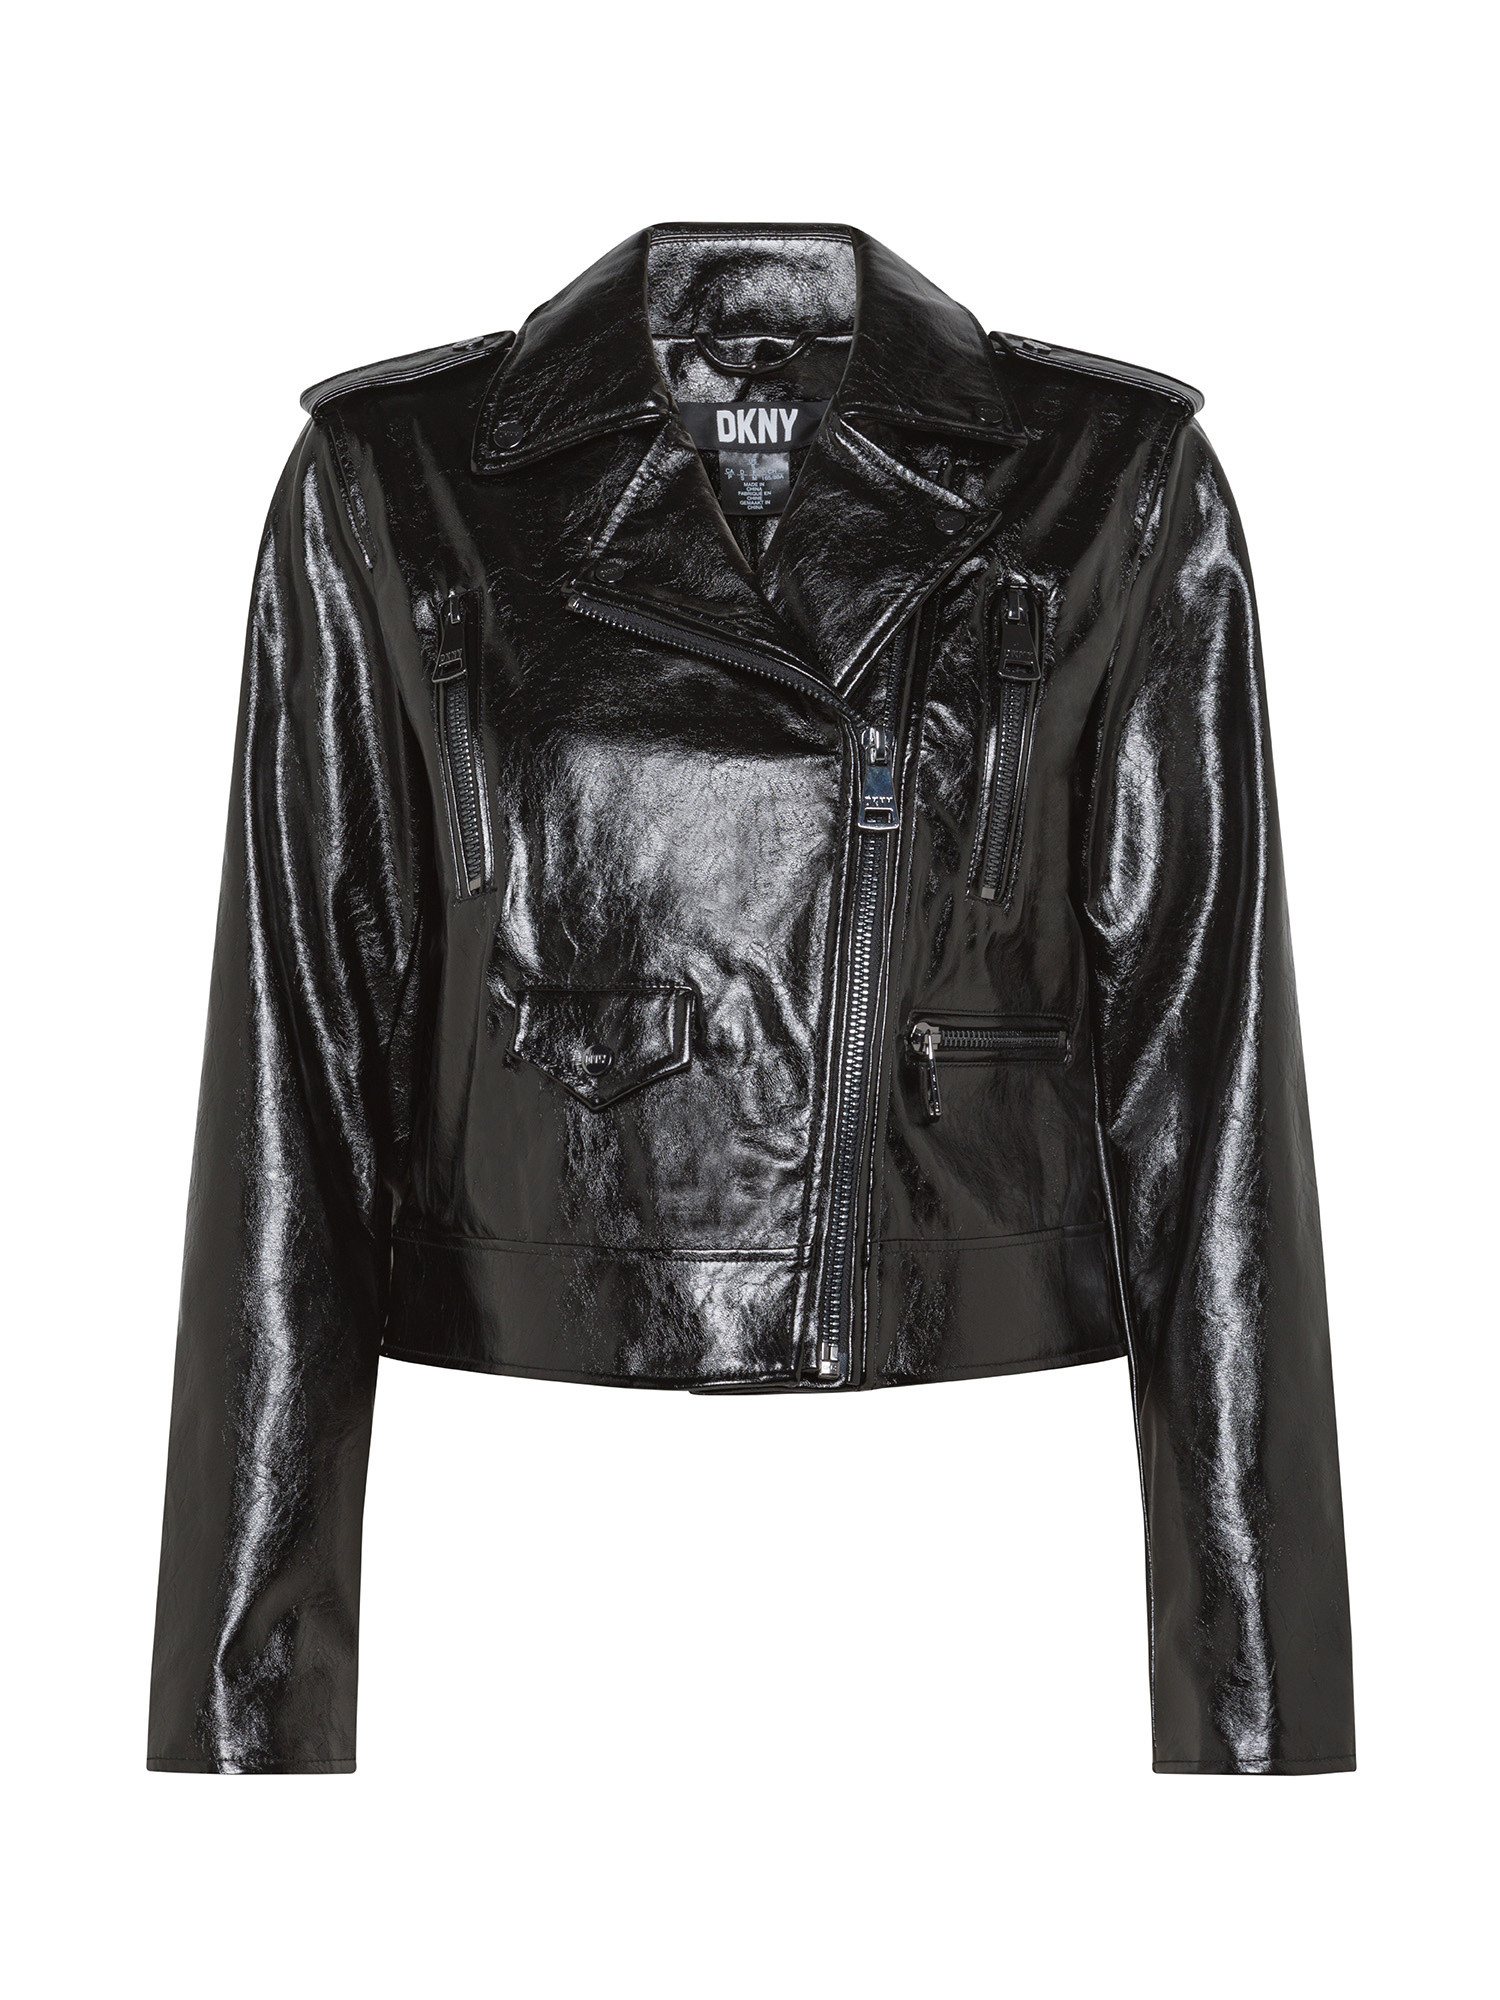 DKNY Vegan Leather Jacket, Black, large image number 0